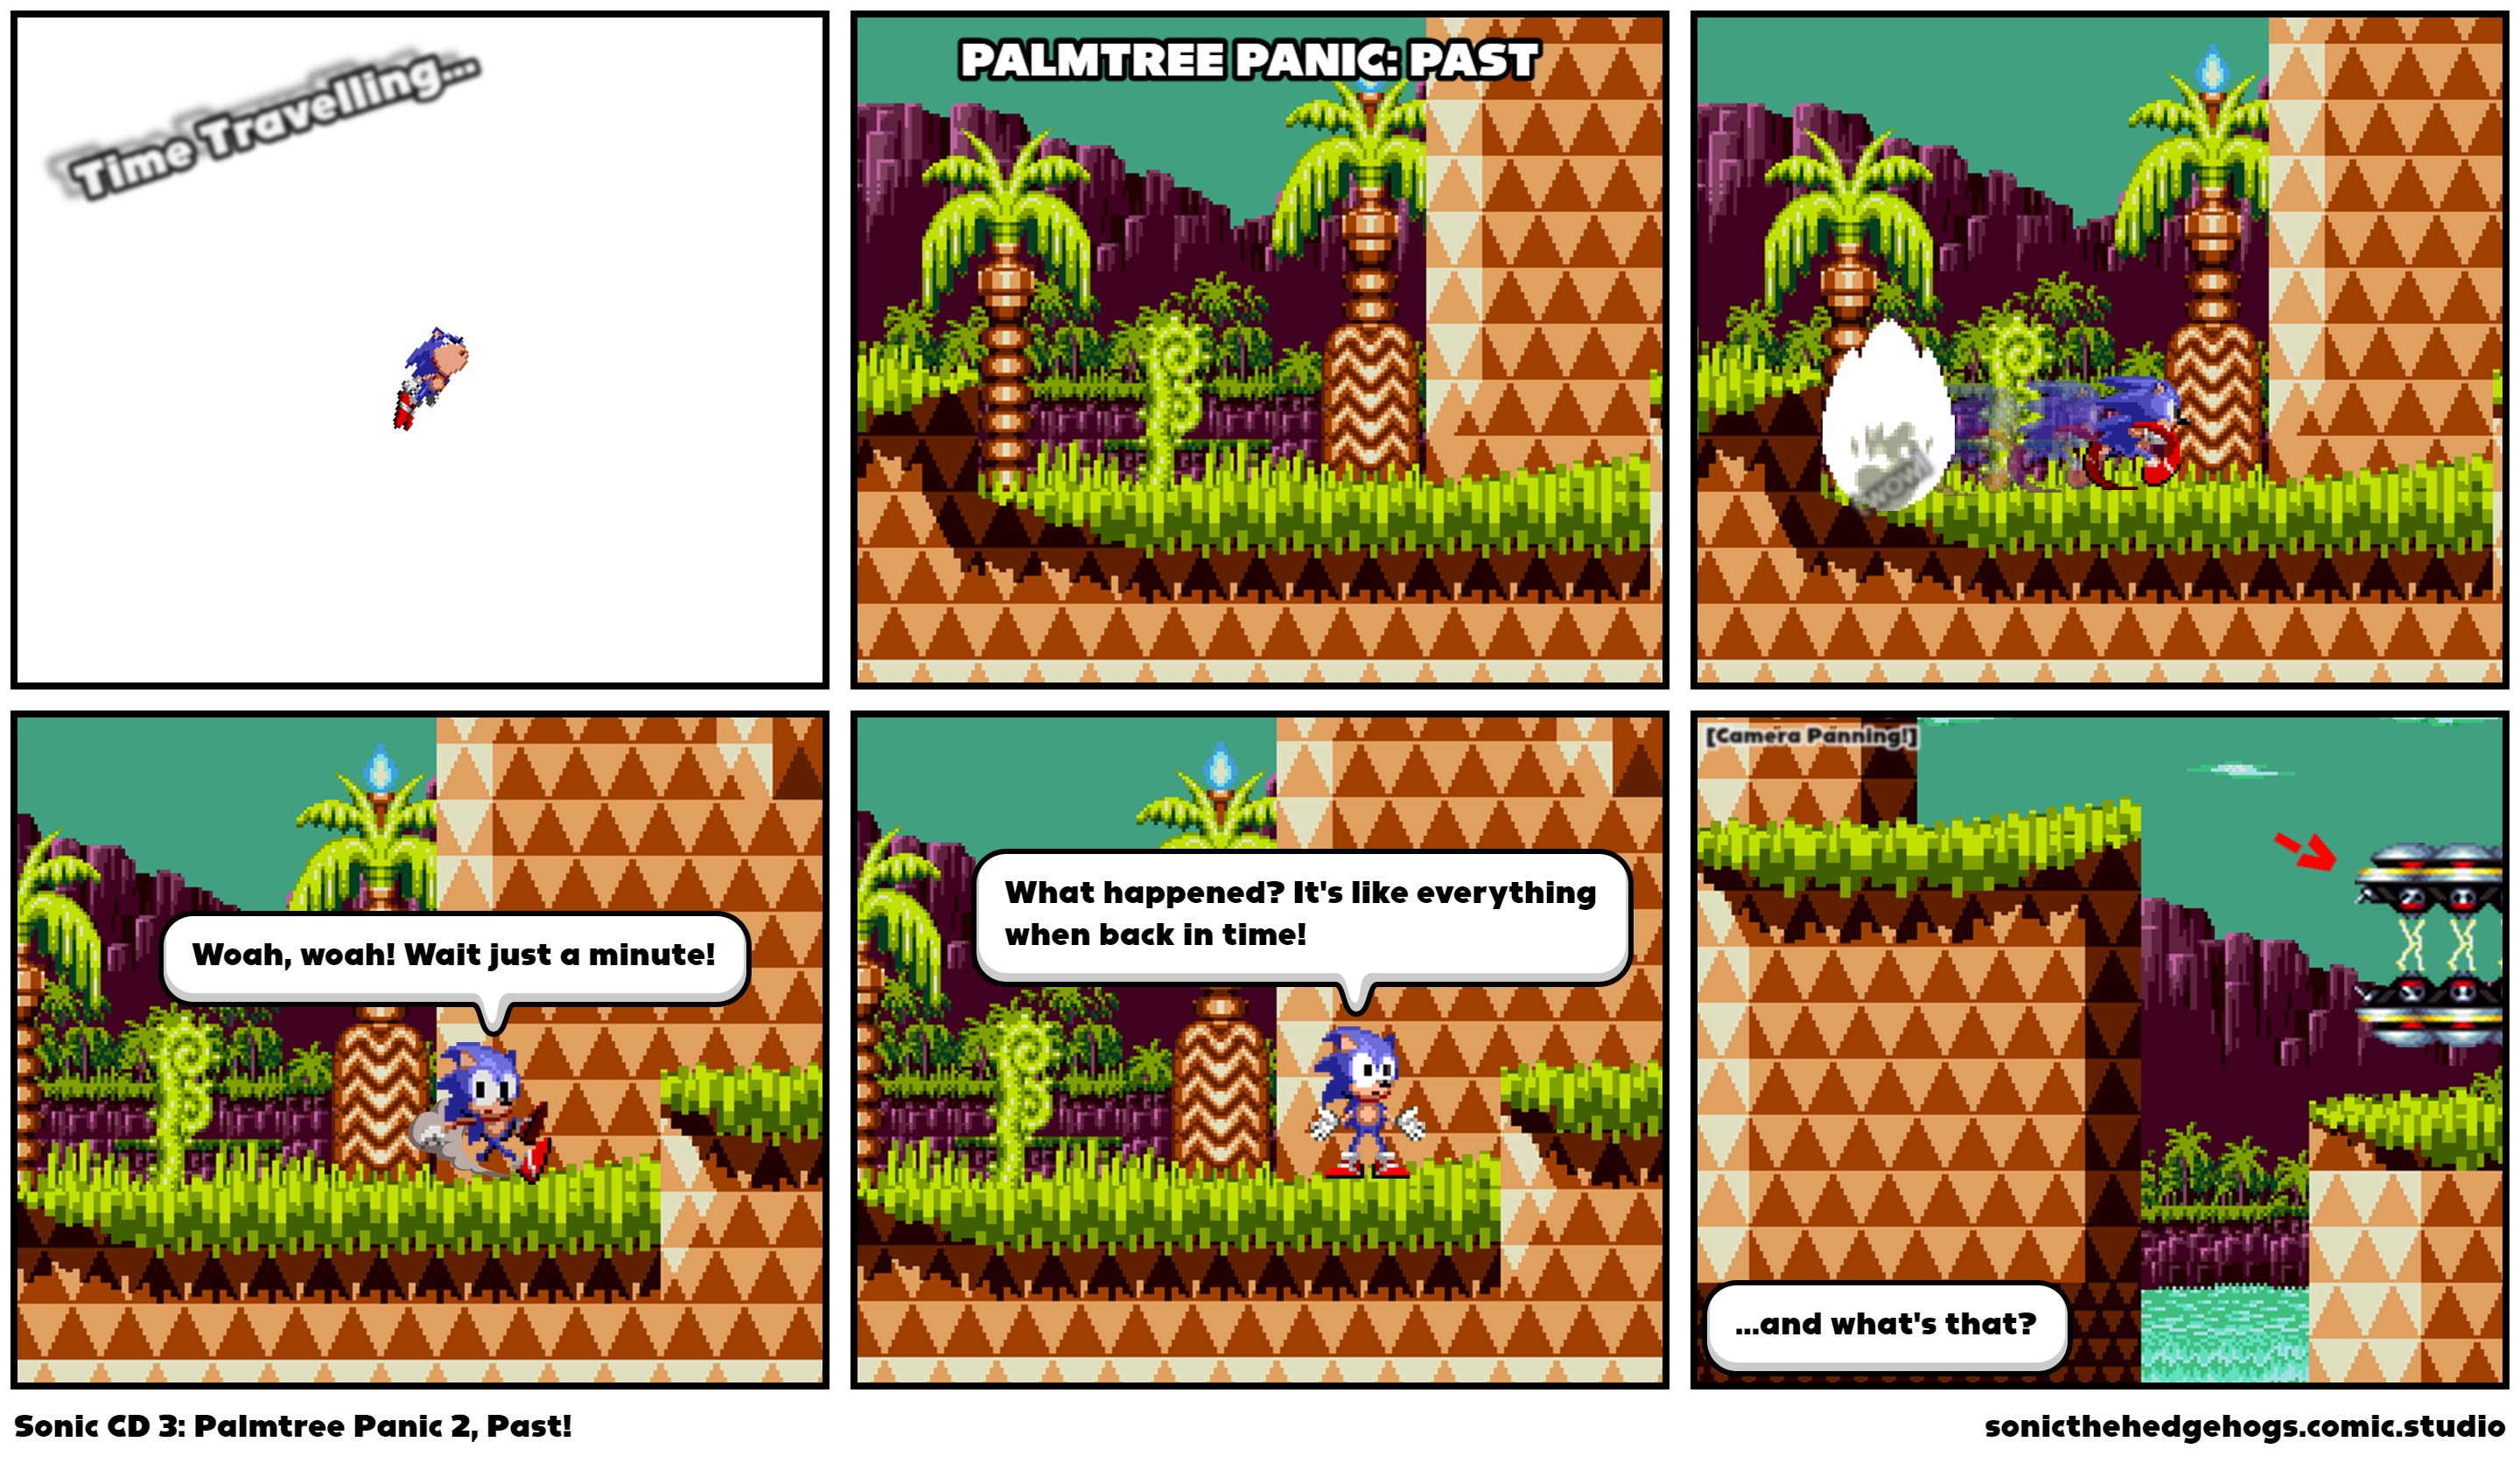 Sonic CD 3: Palmtree Panic 2, Past!